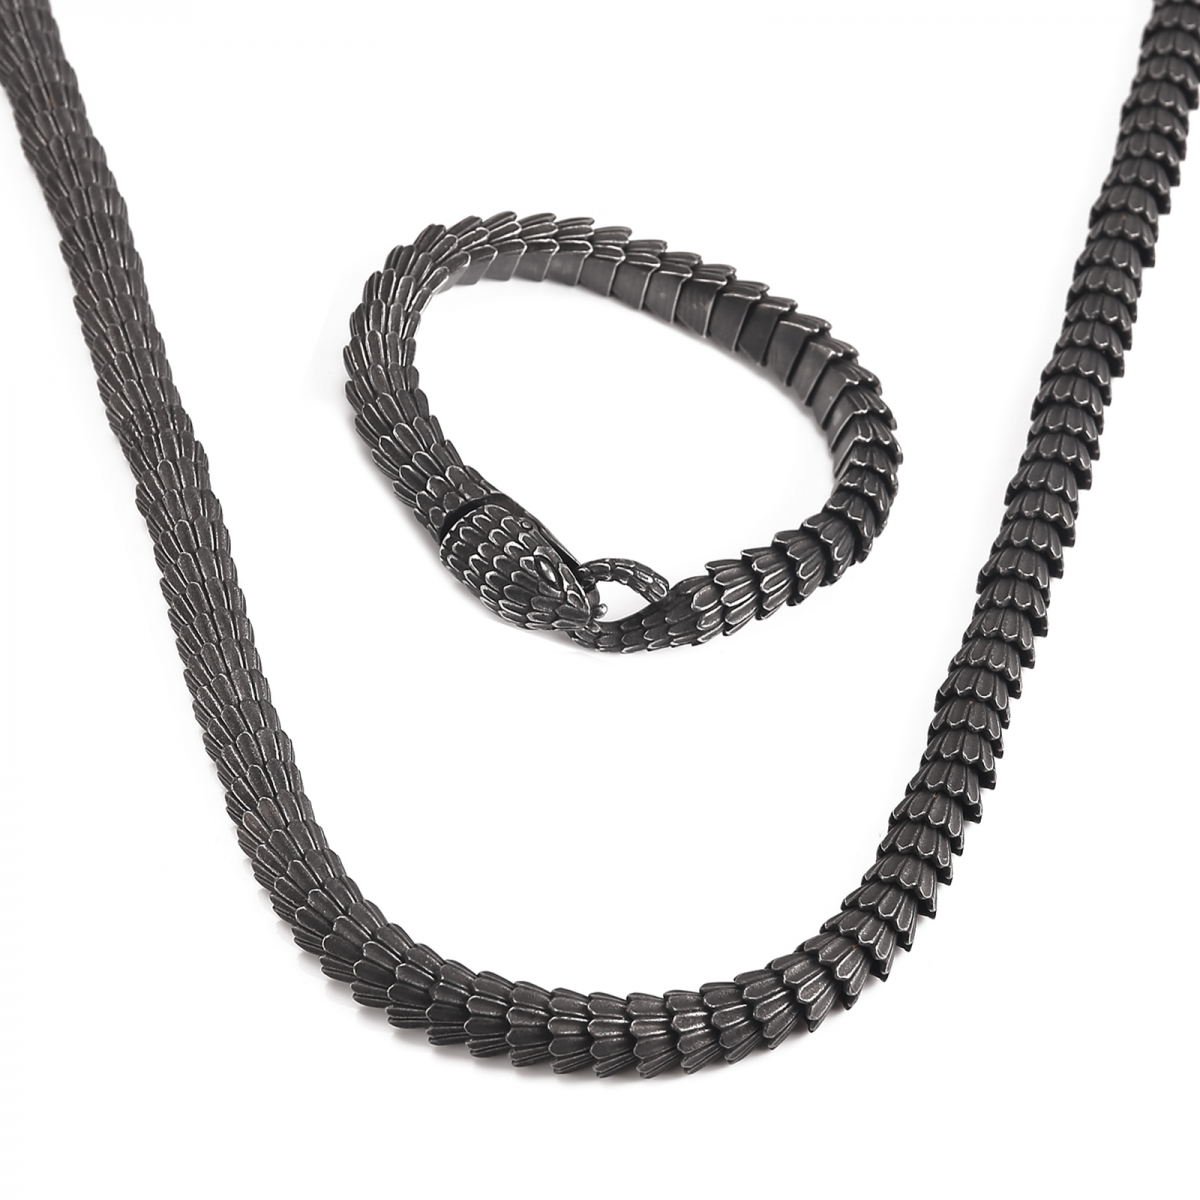 World Serpent Jormungandr Snake Chain Set US$37/Set-NORSECOLLECTION- Viking Jewelry,Viking Necklace,Viking Bracelet,Viking Rings,Viking Mugs,Viking Accessories,Viking Crafts